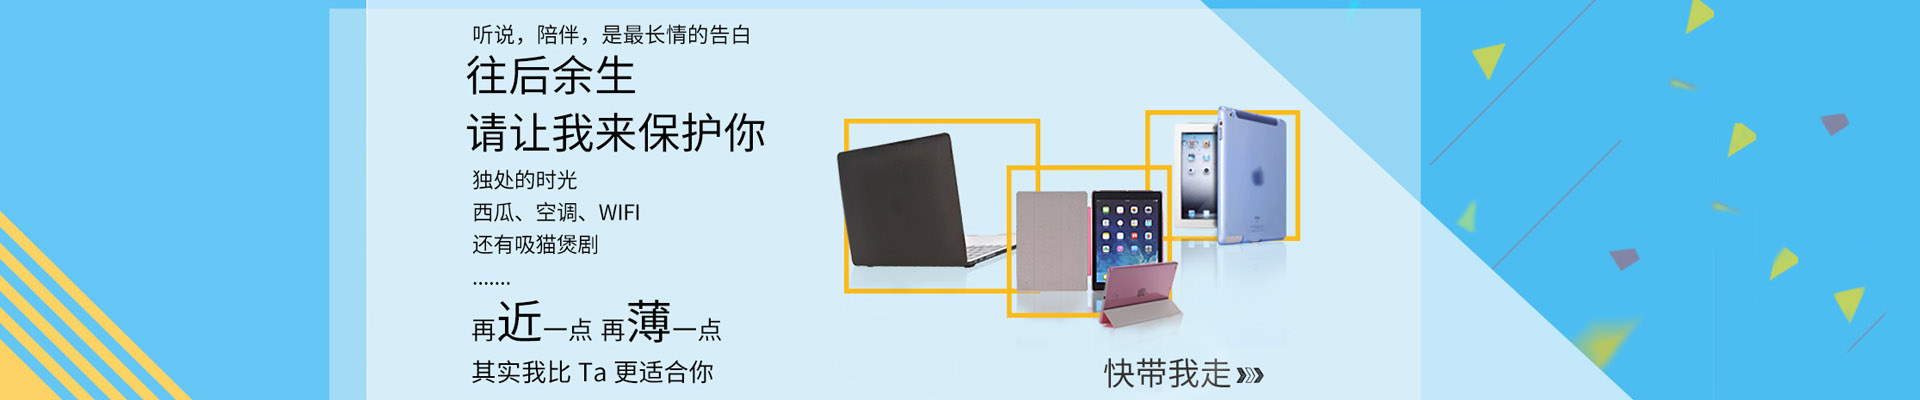 MacBook PC保护壳-东莞市成康电子有限公司